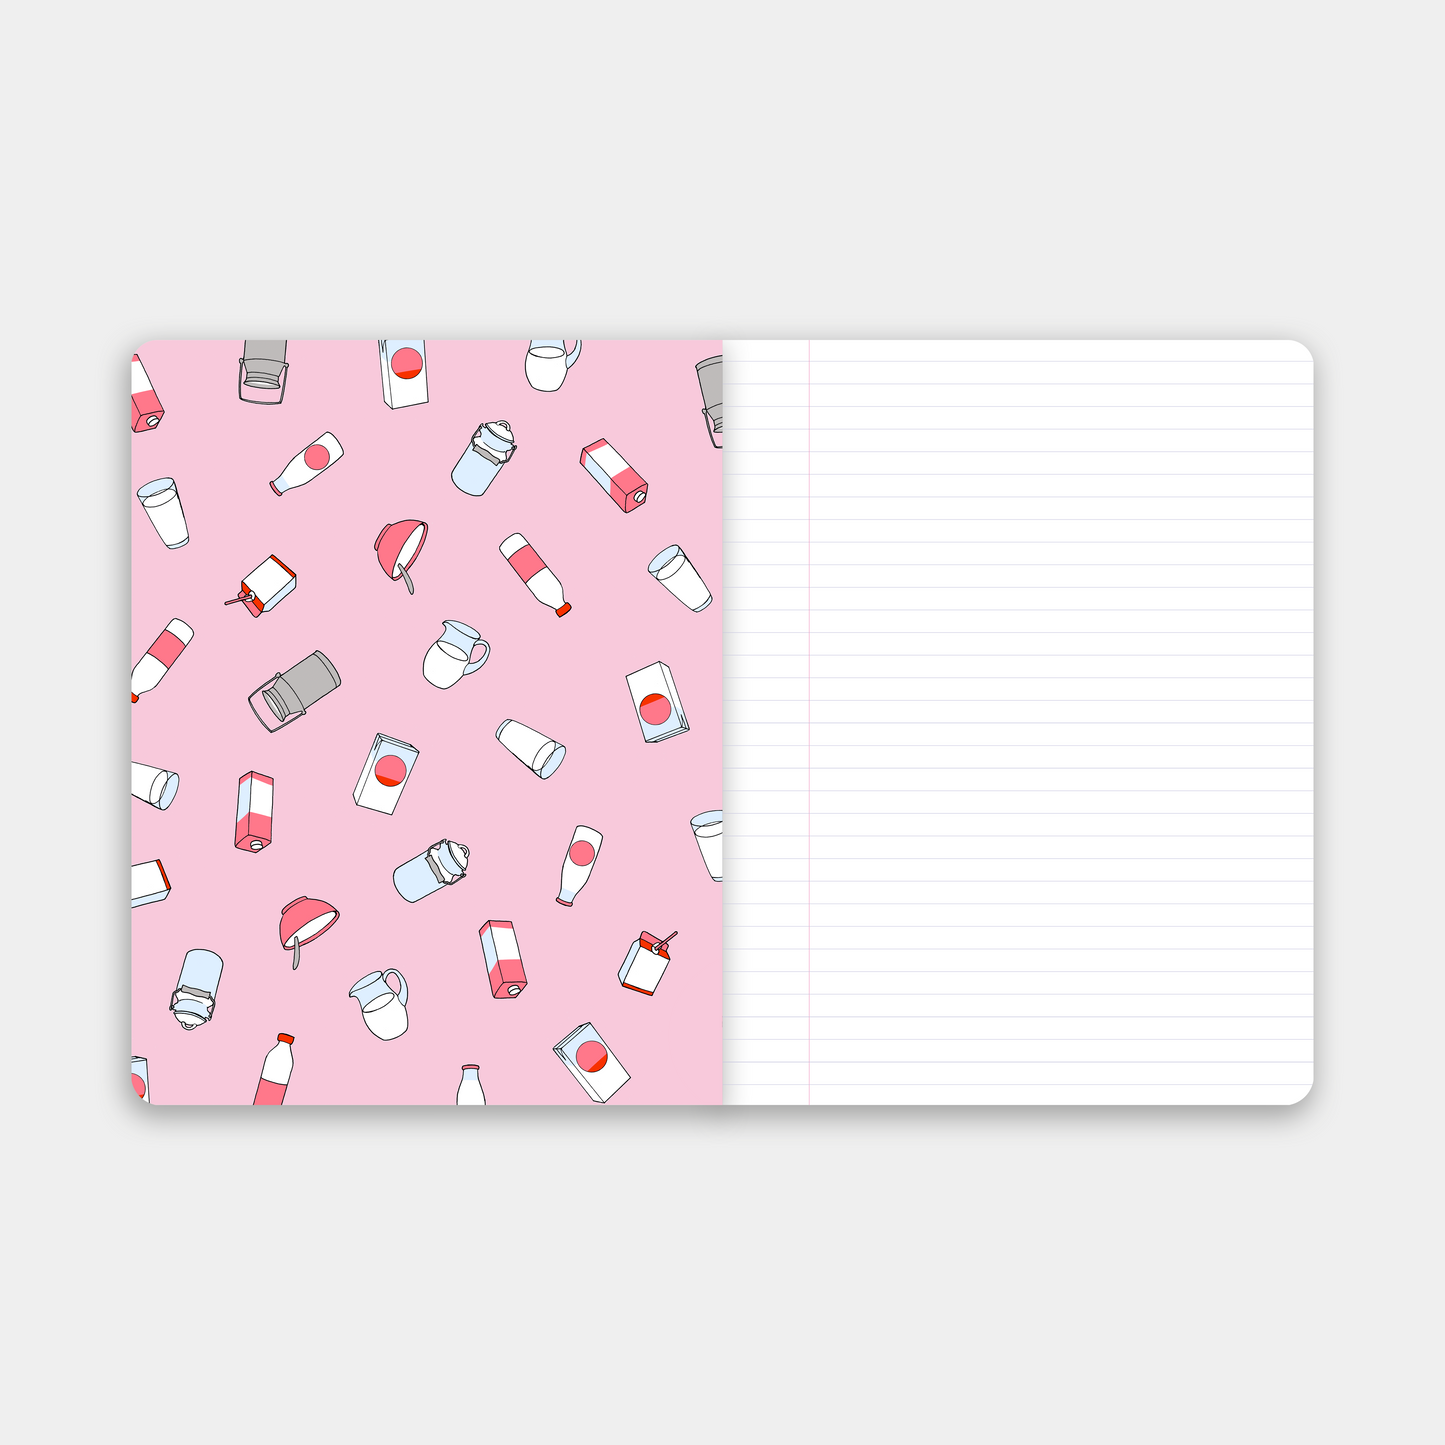 Muh & Moo | School Notebook